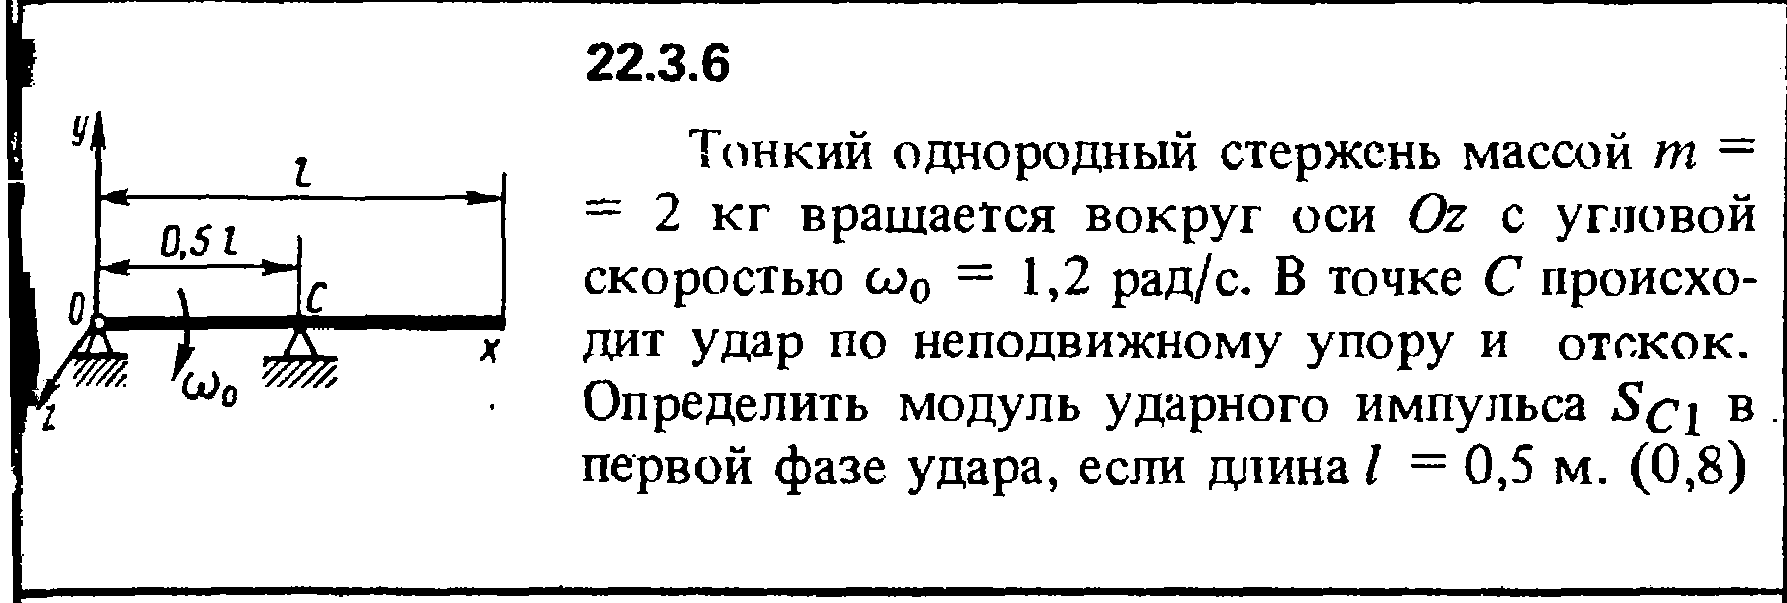 Решение 22.3.6 из сборника (решебника) Кепе О.Е. 1989